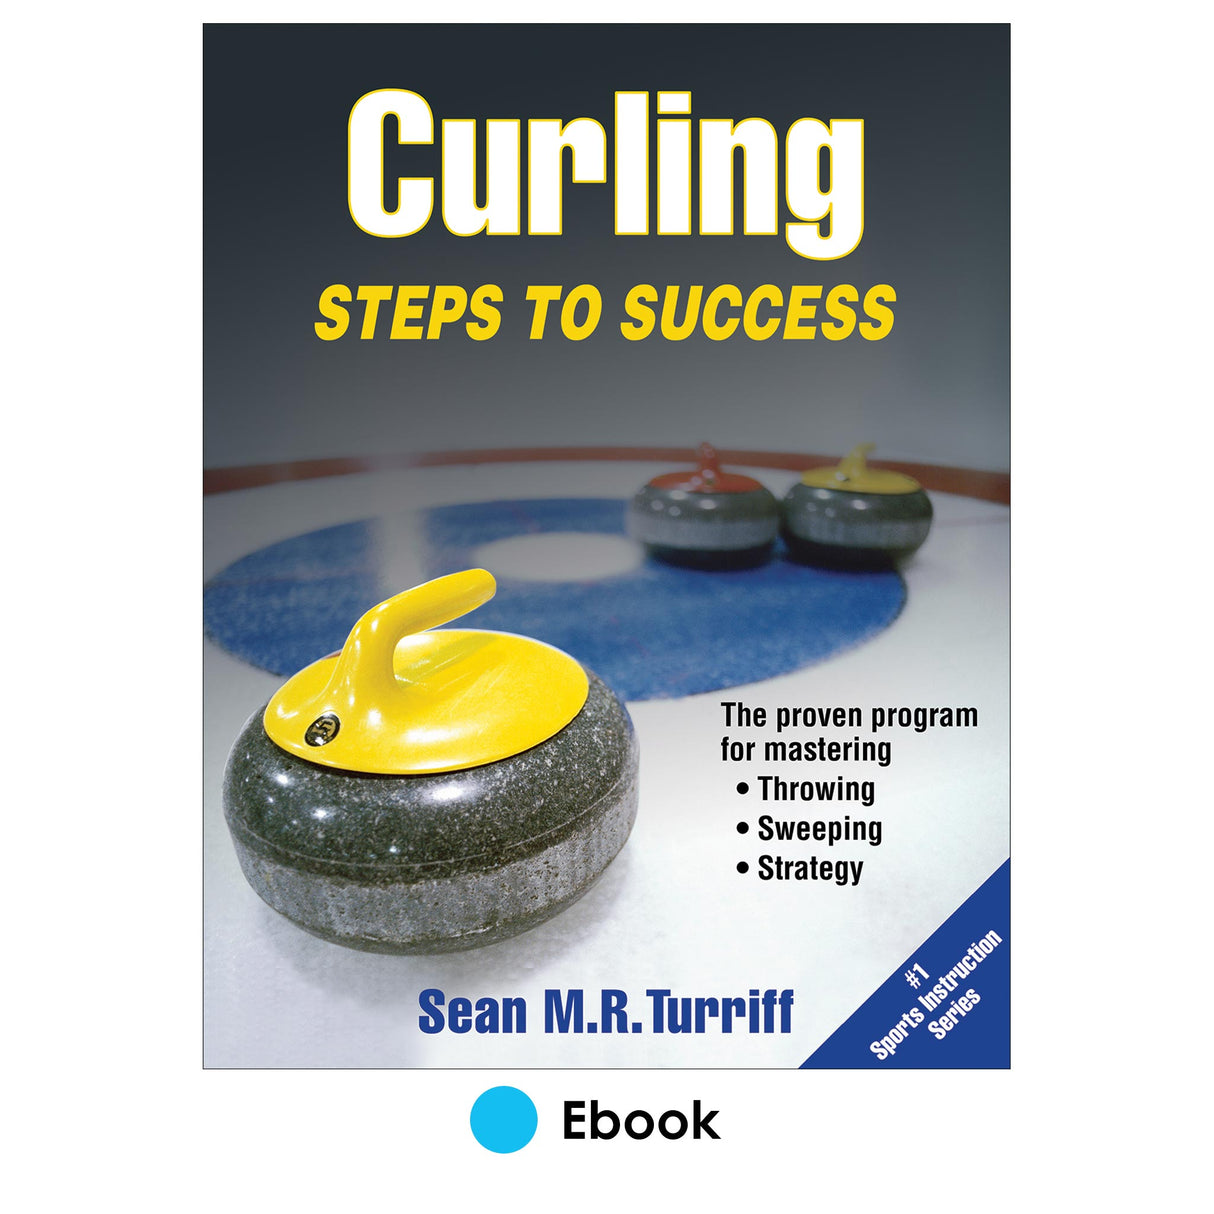 Curling PDF